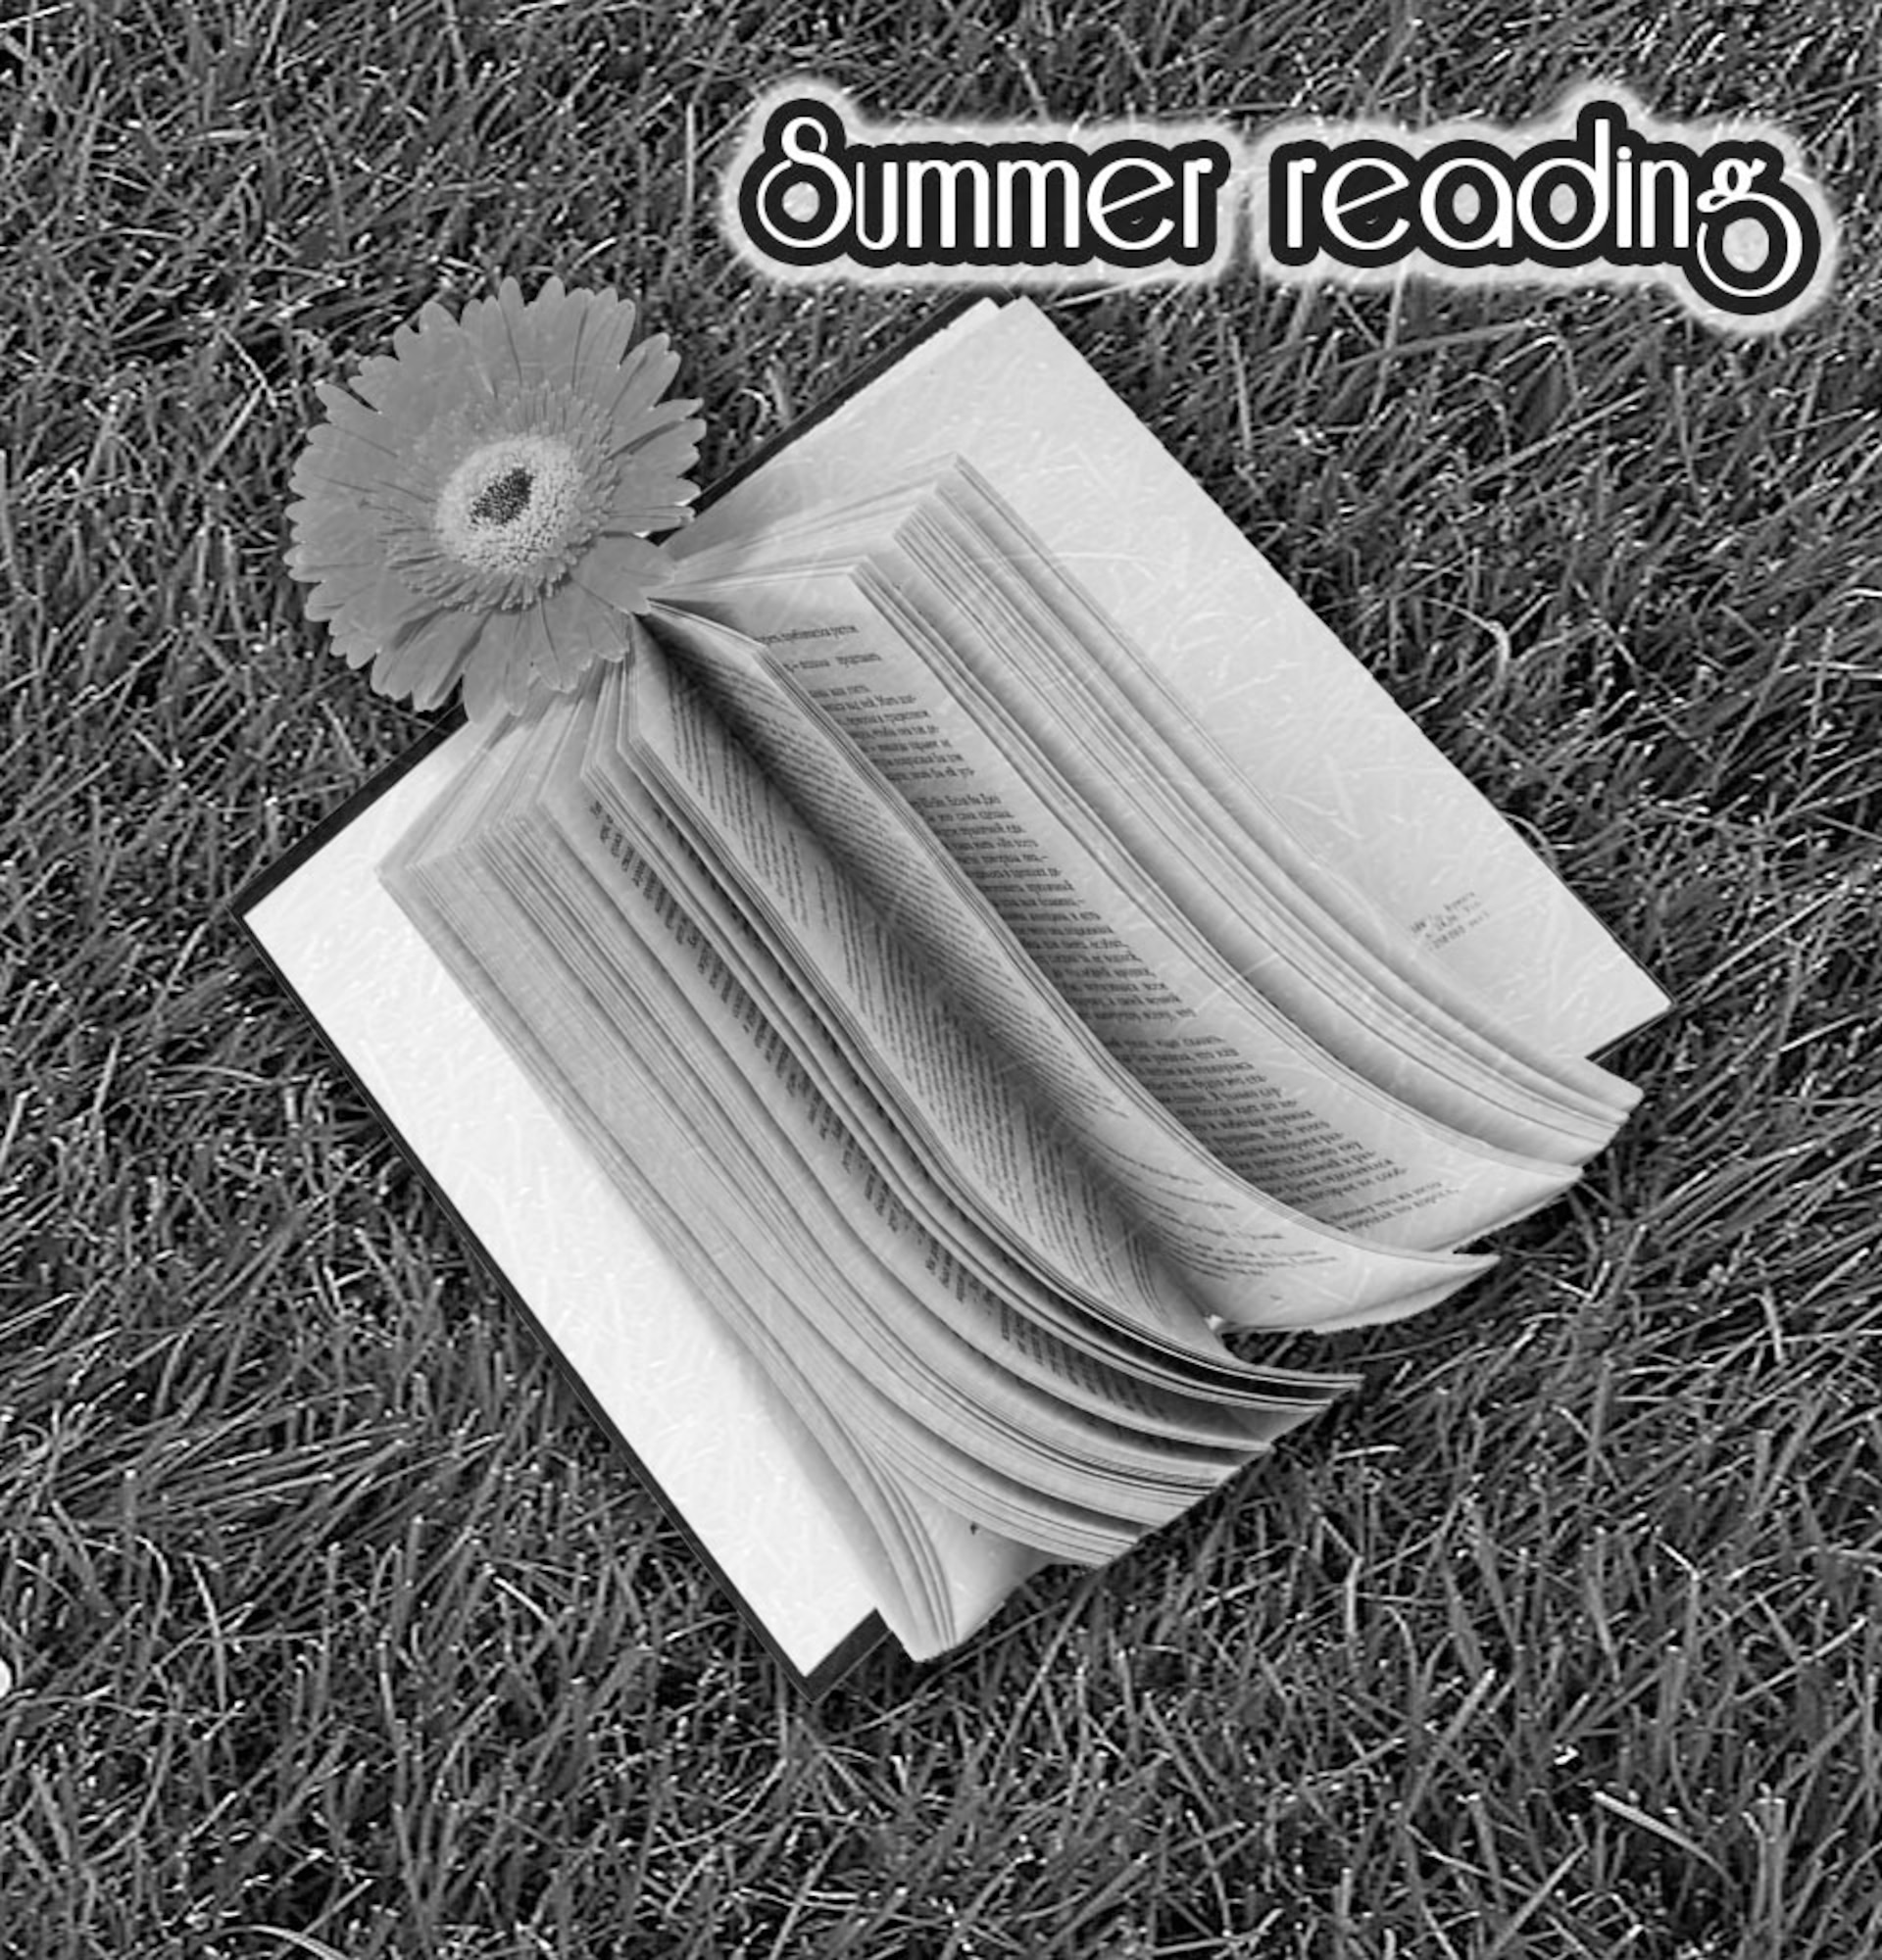 Summer Reading Programs available through Maxwell-Gunter libraries. (U.S. Air Force illustration/Michael Paul)